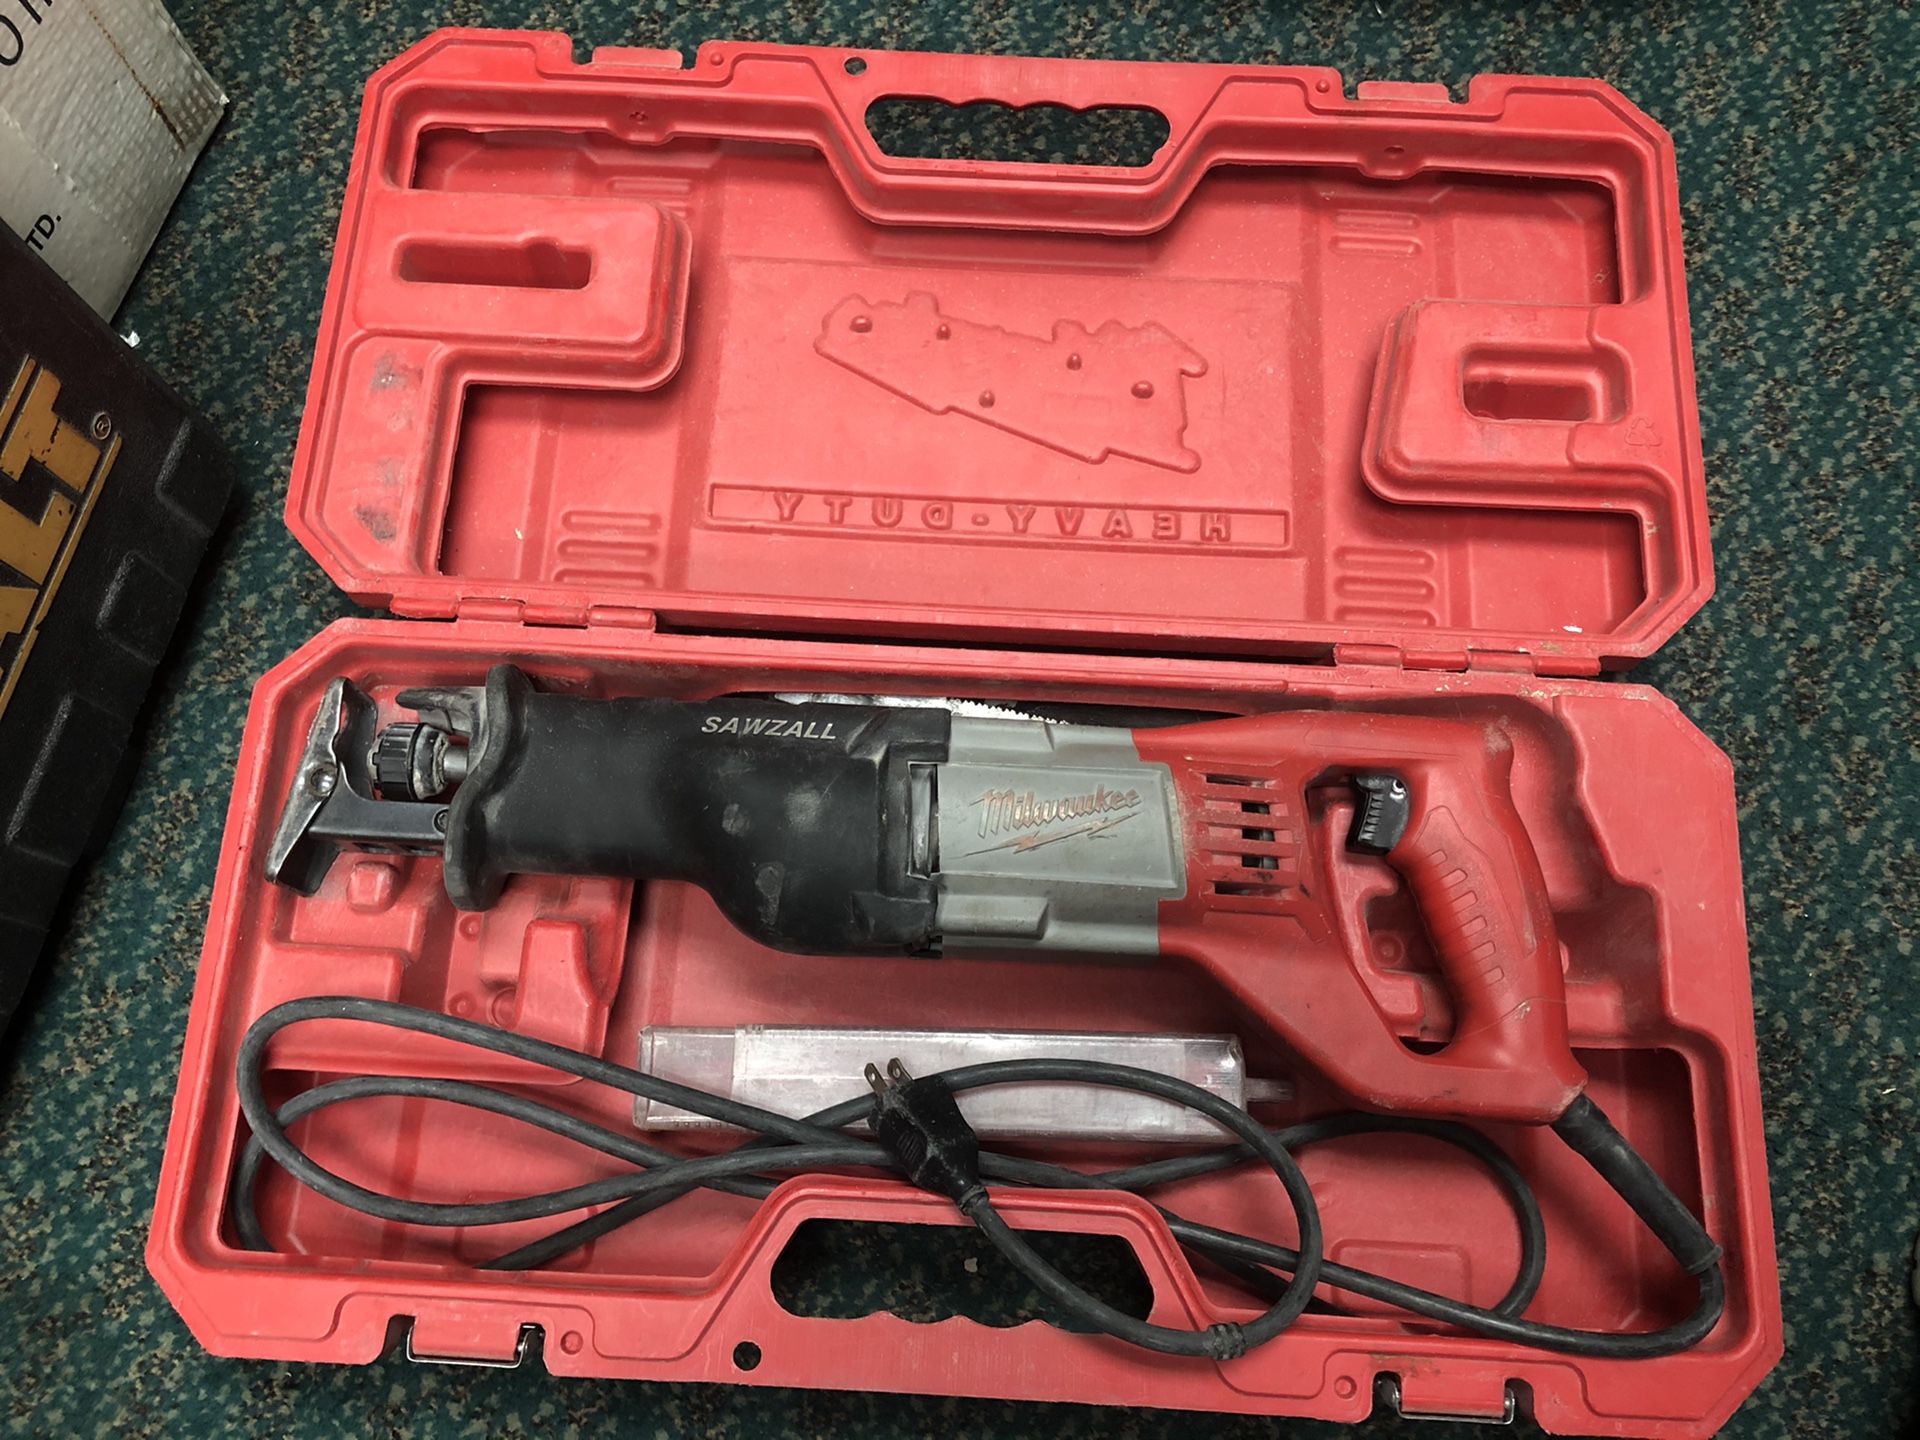 Sawzall, Tools-Power Milwaukee 6519-30 ... Negotiable